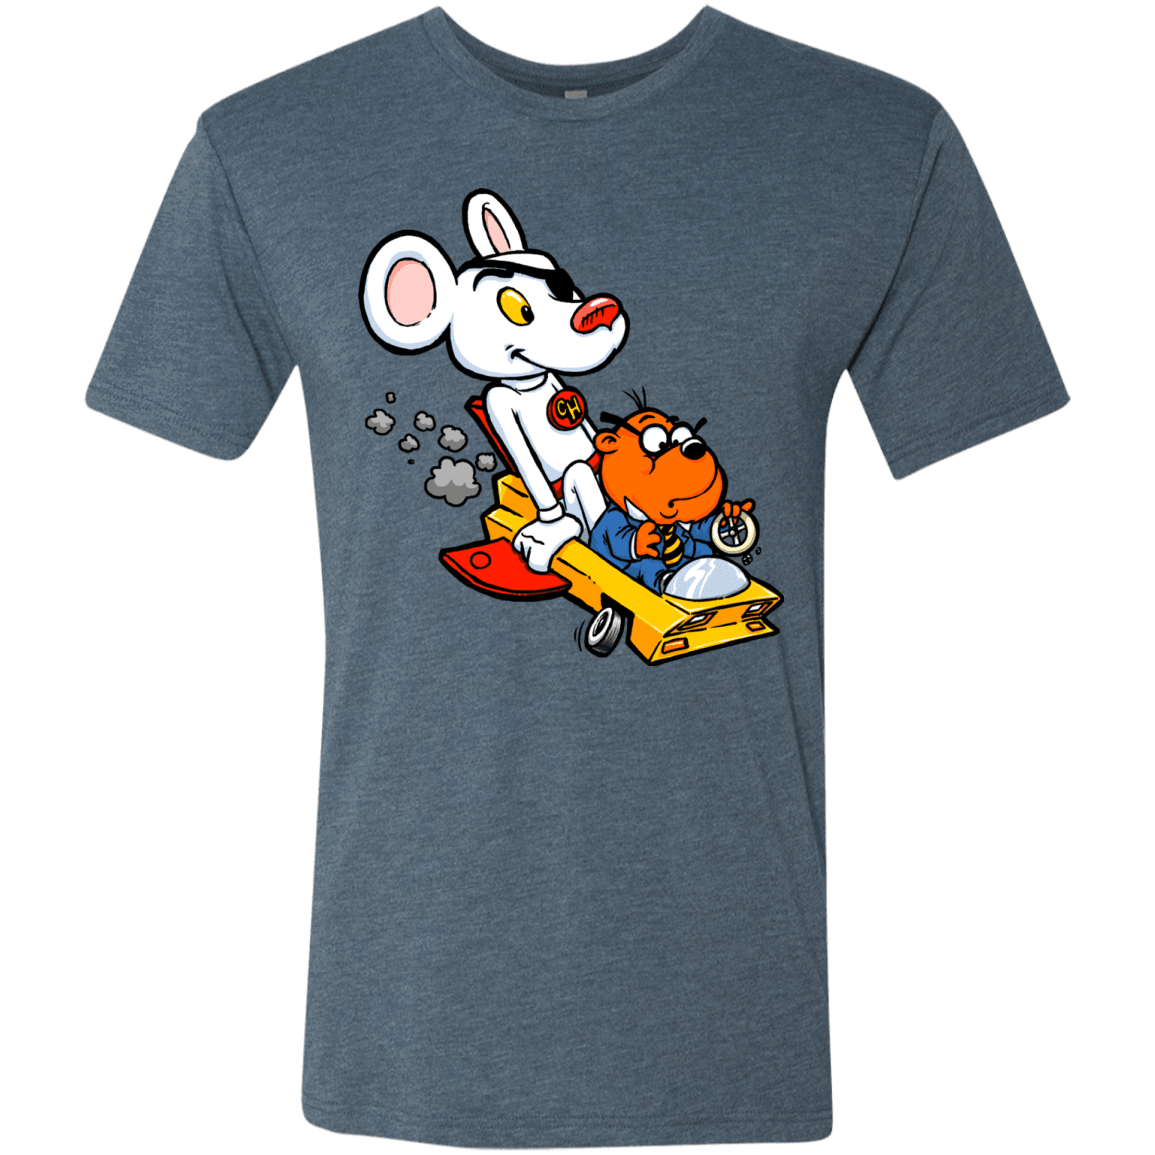 T-Shirts Indigo / Small Danger Mouse Men's Triblend T-Shirt